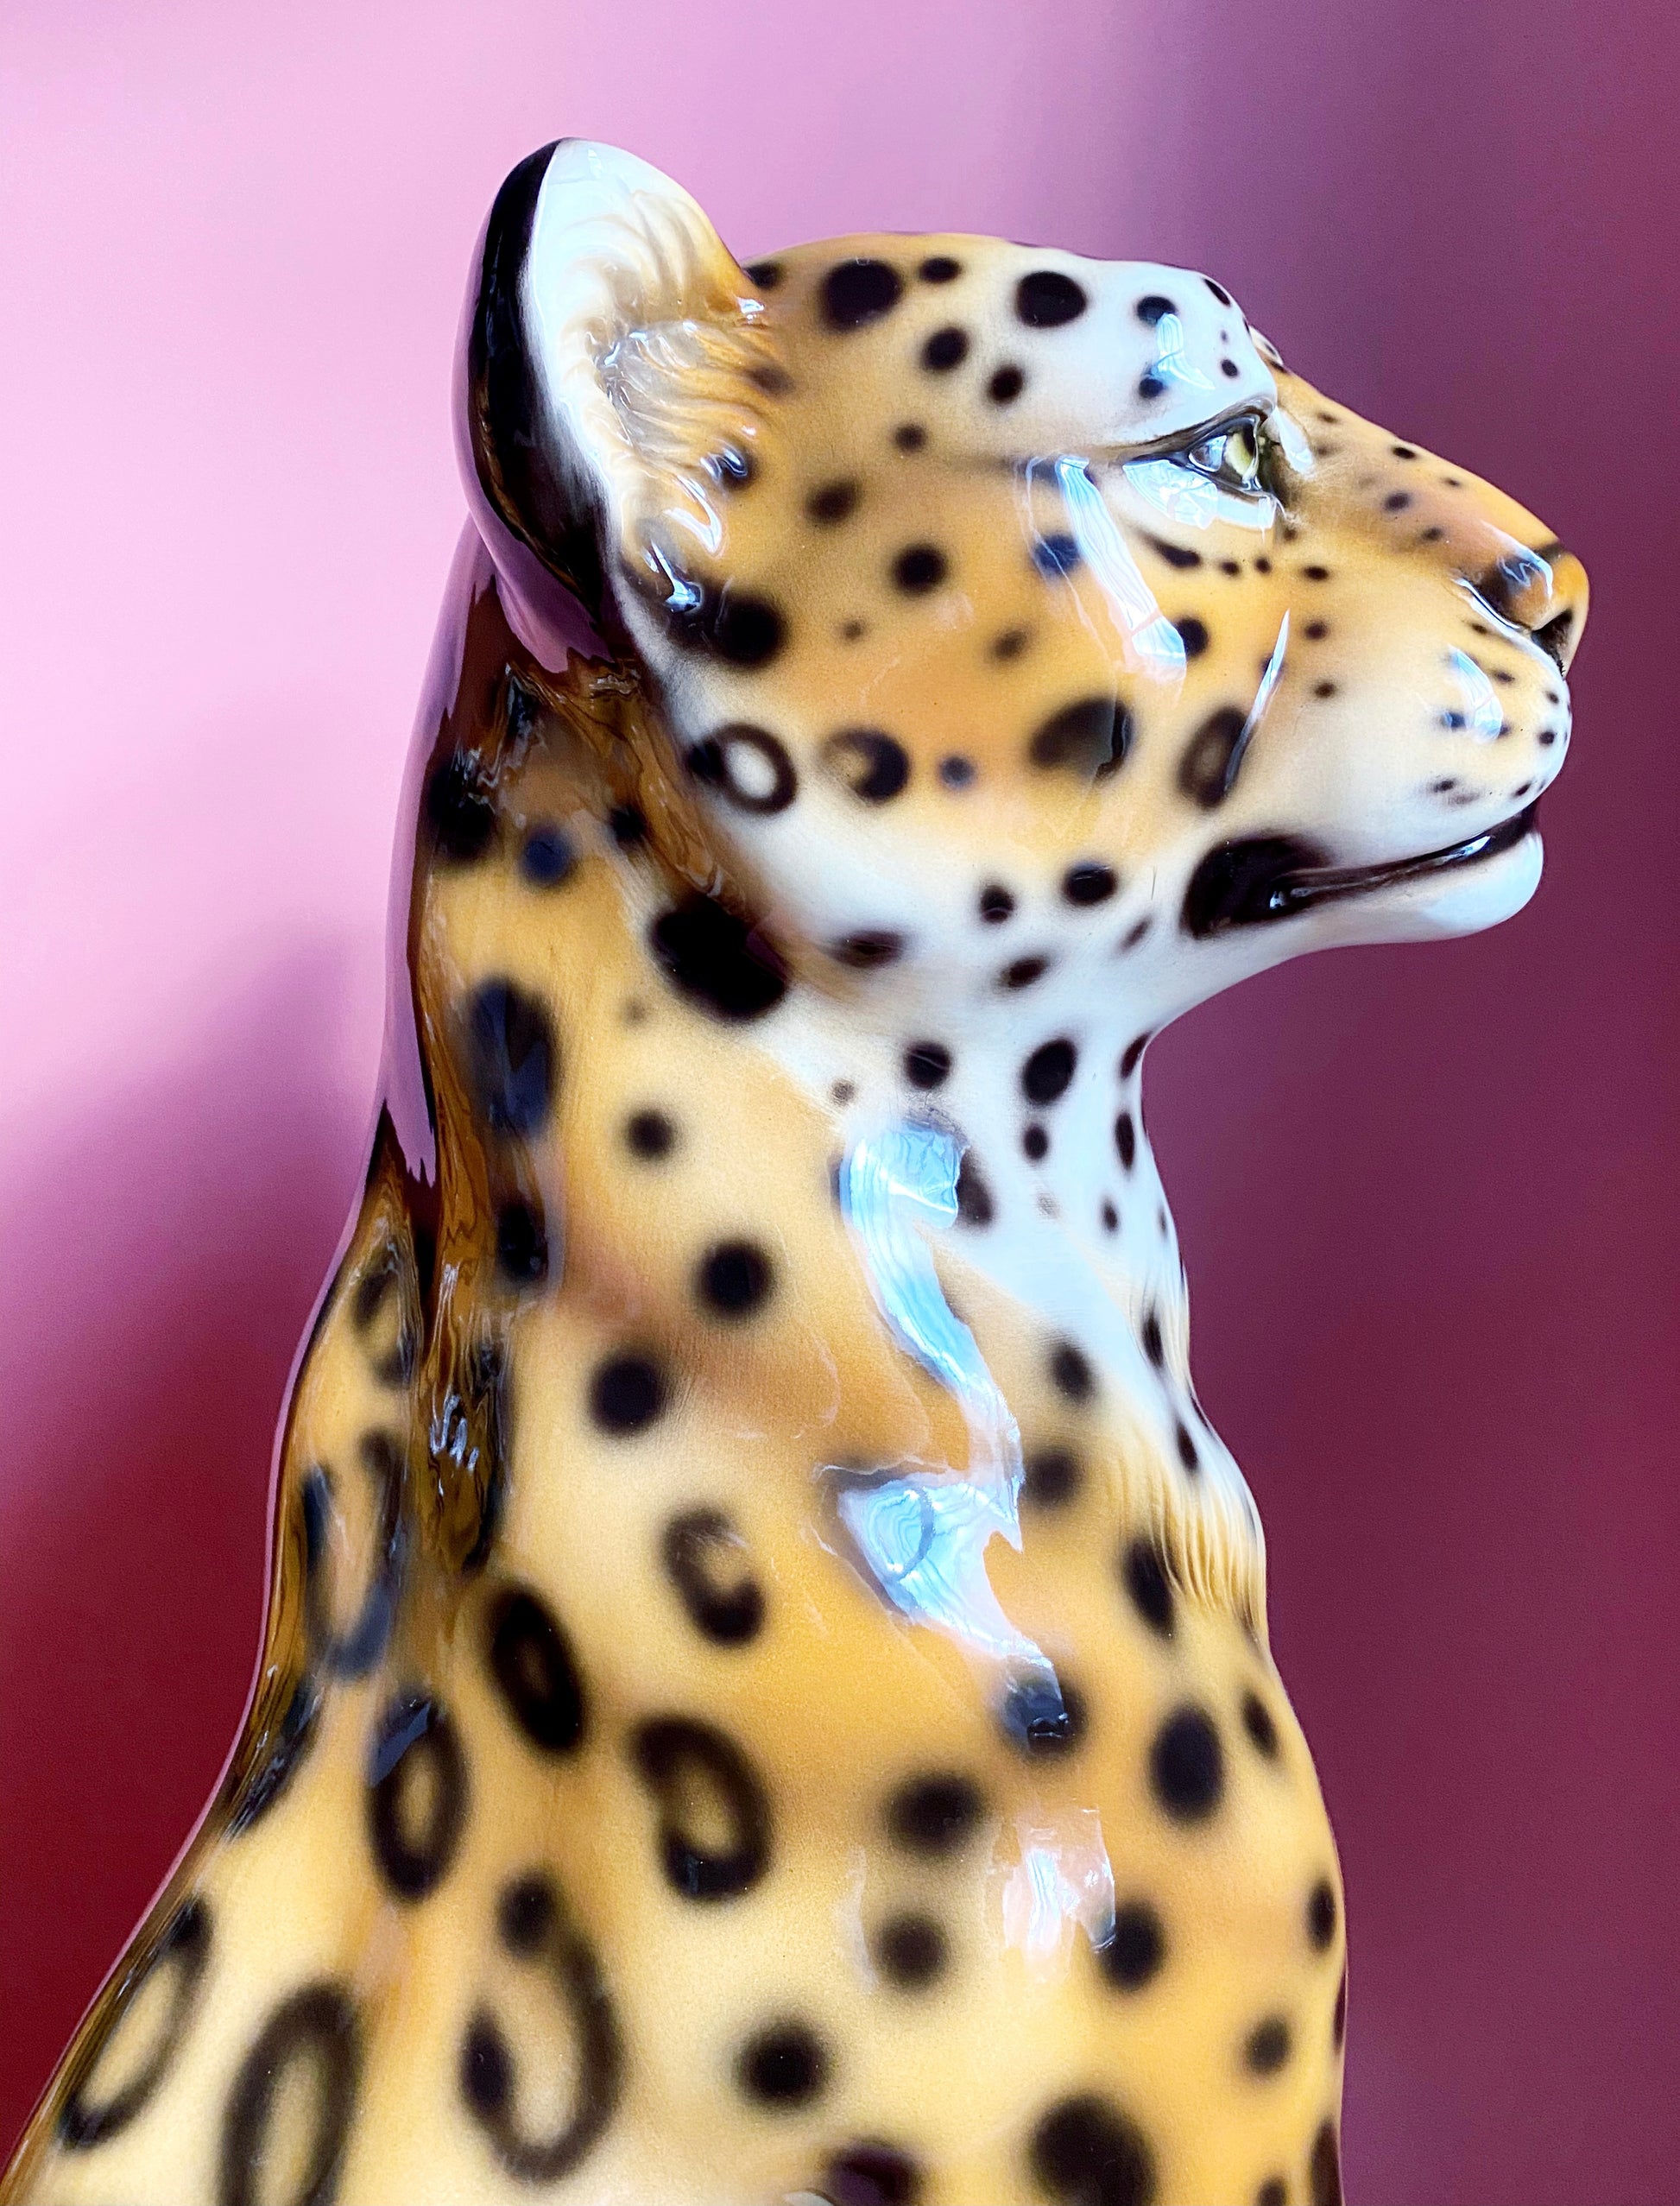 Dolly' Large Ceramic Leopard Statue Vintage – Dogwood Lifestyle